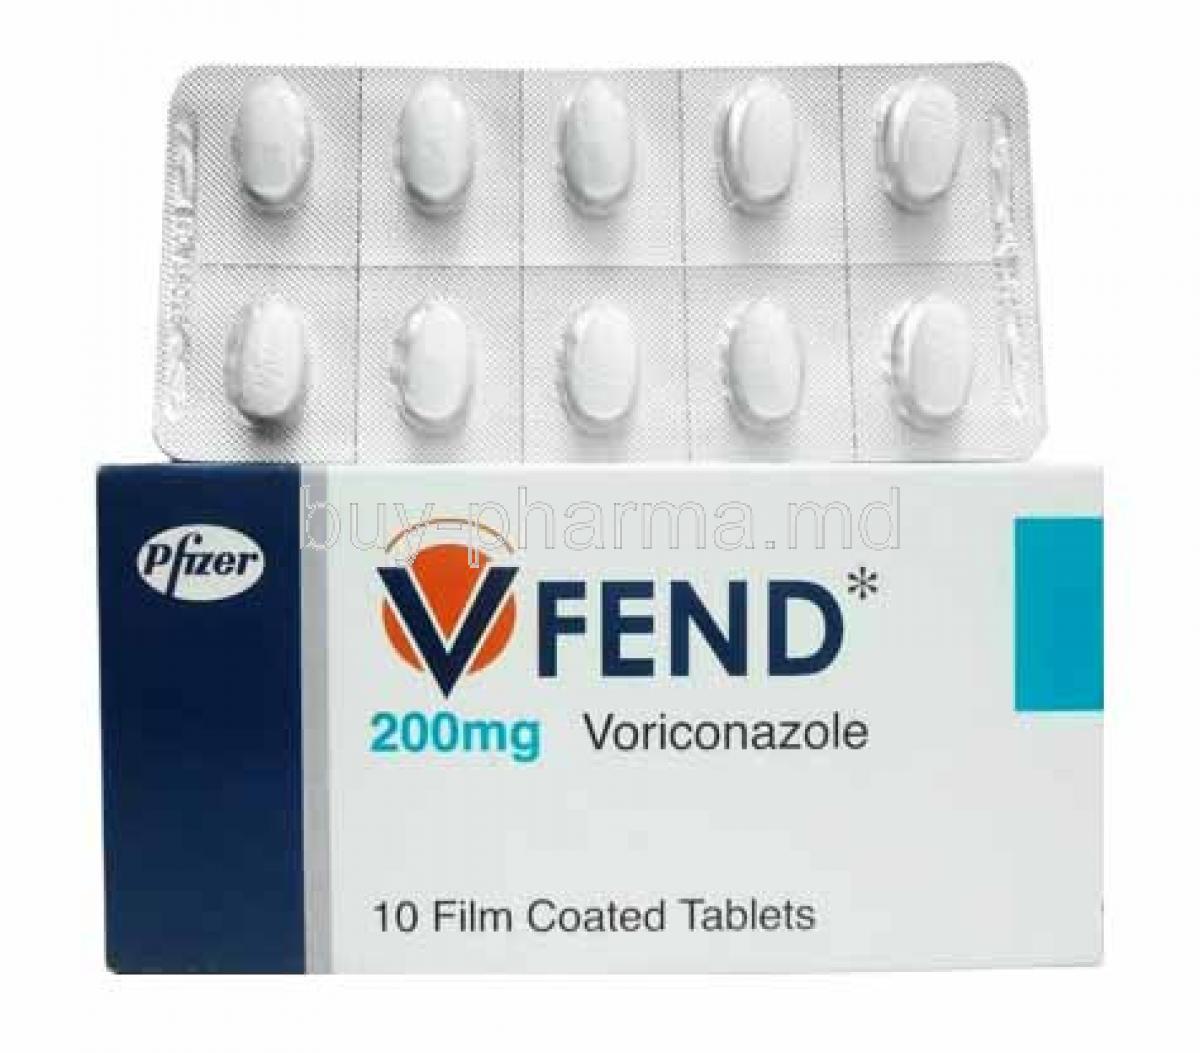 Vfend, Voriconazole 200mg box and tablets